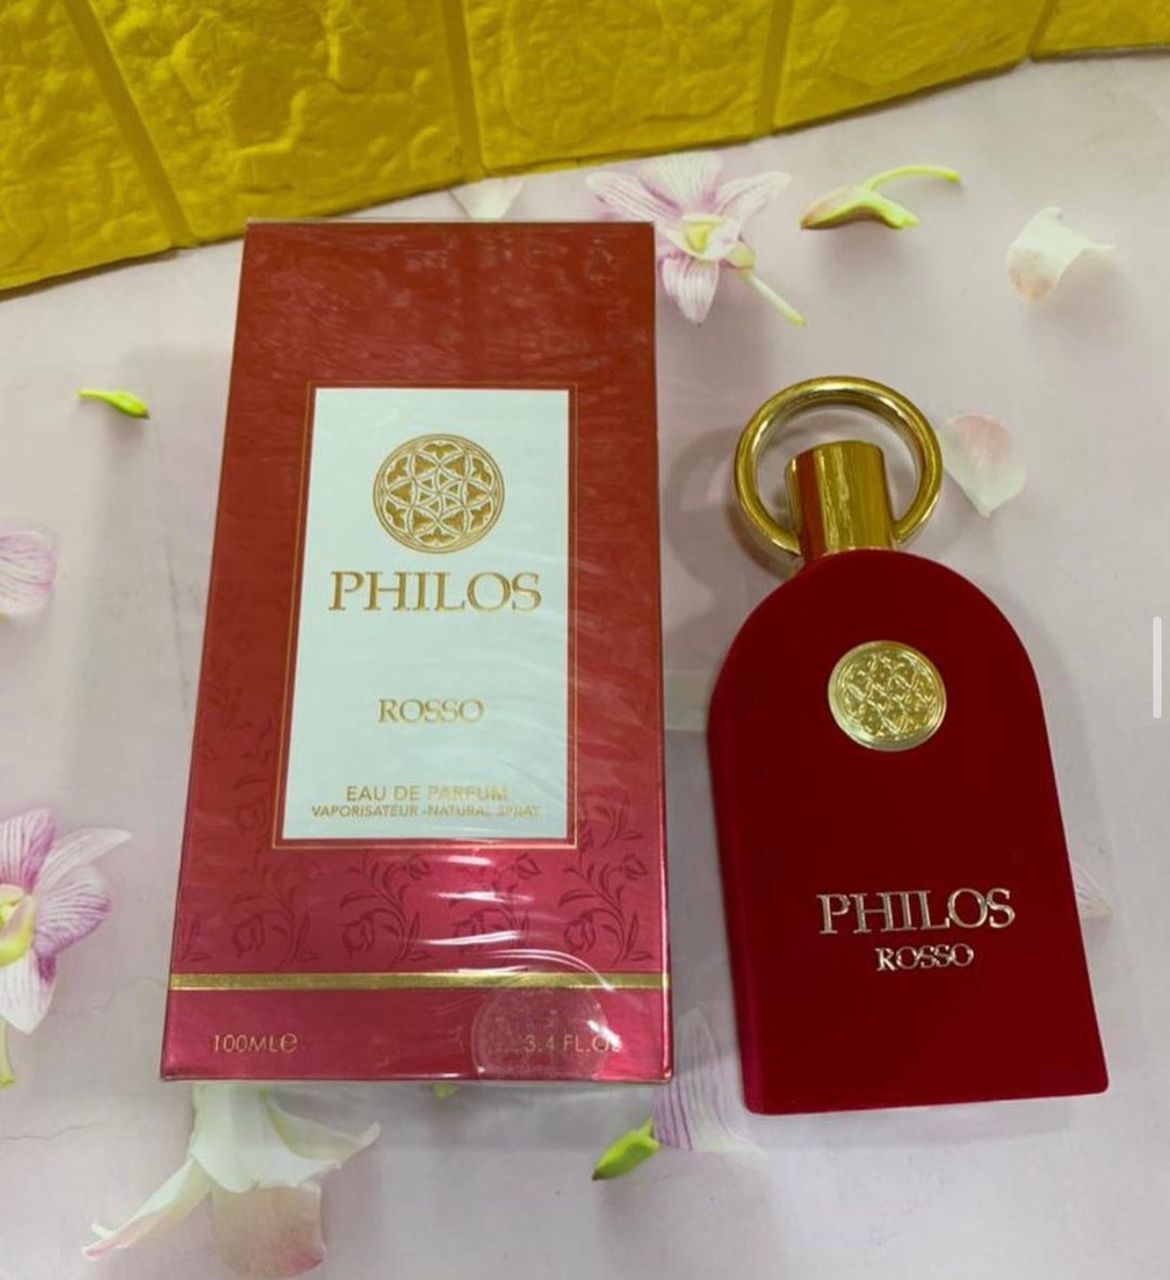 Philos Rosso Perfume.